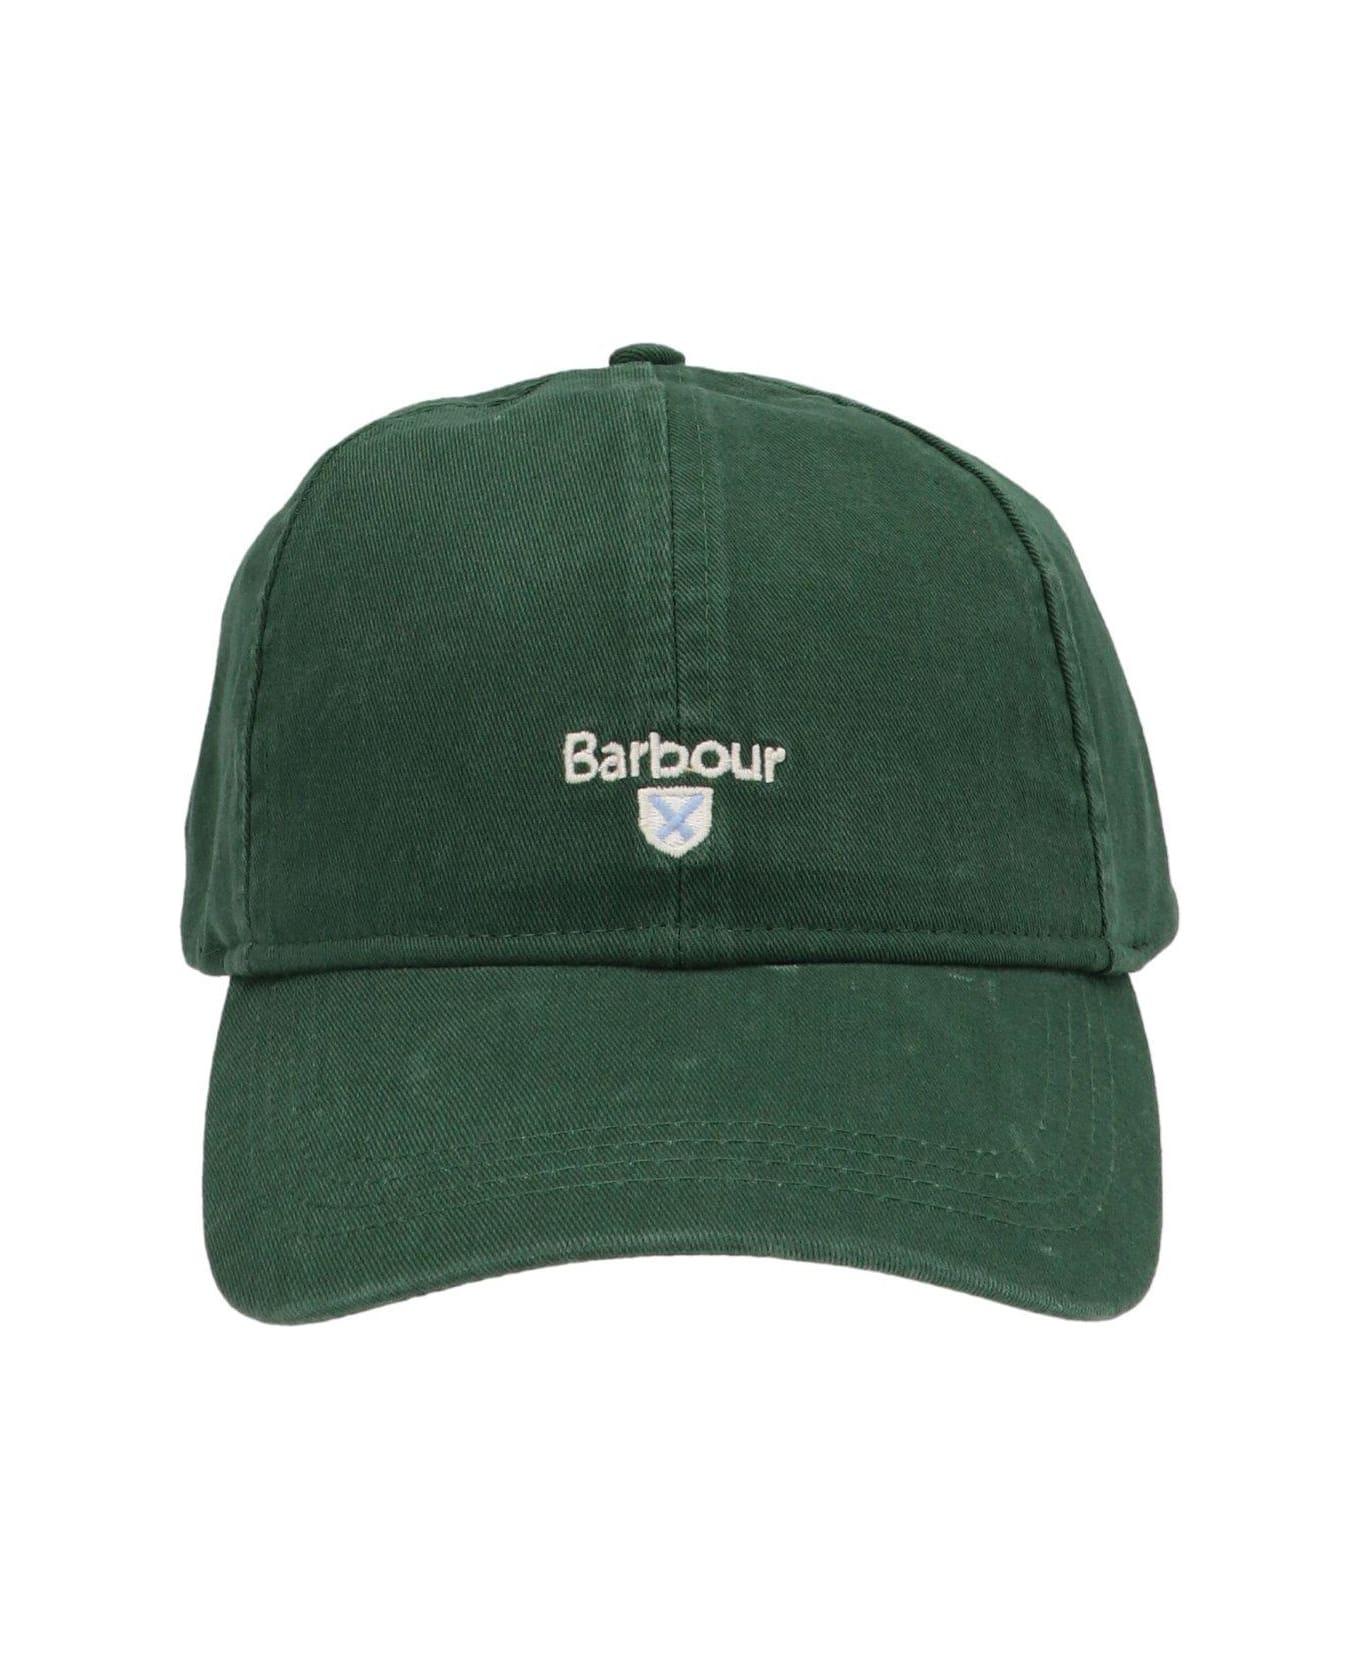 Barbour Logo Embroidered Baseball Cap - Racing Green